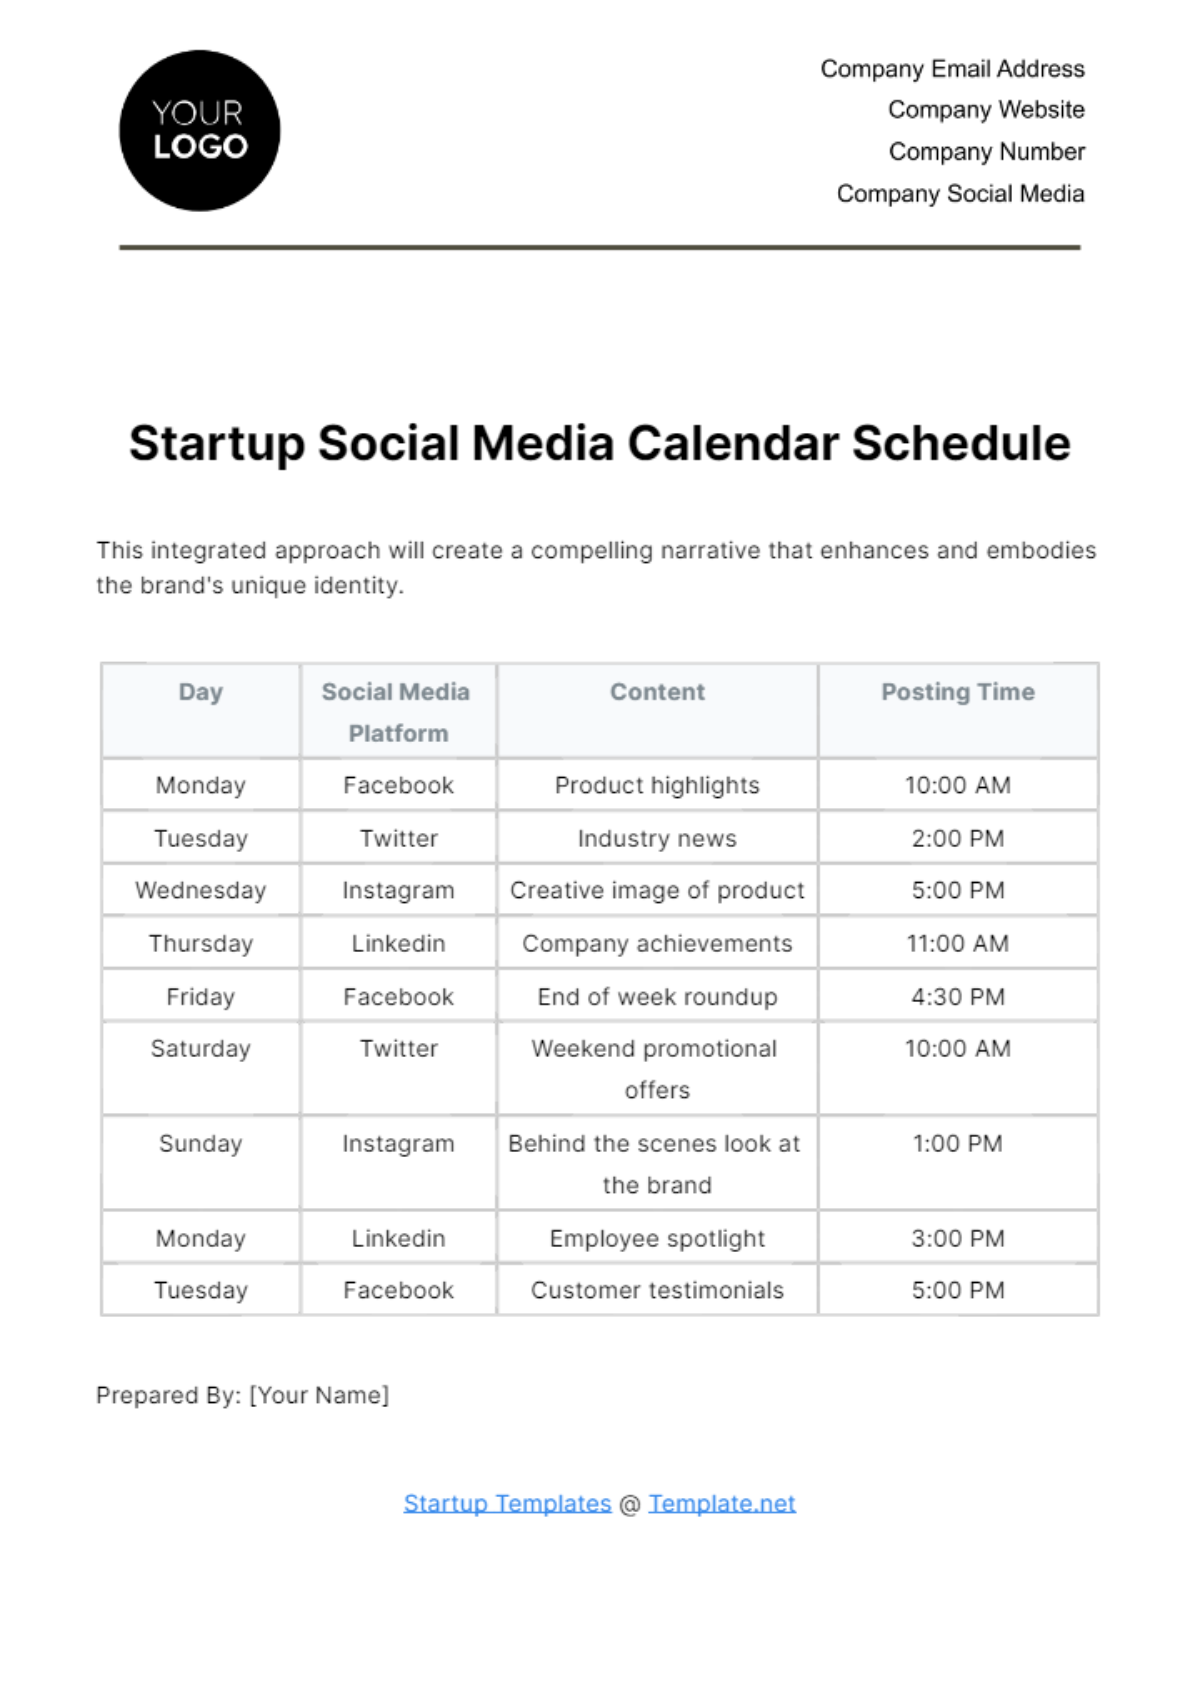 Free Startup Social Media Calendar Schedule Template